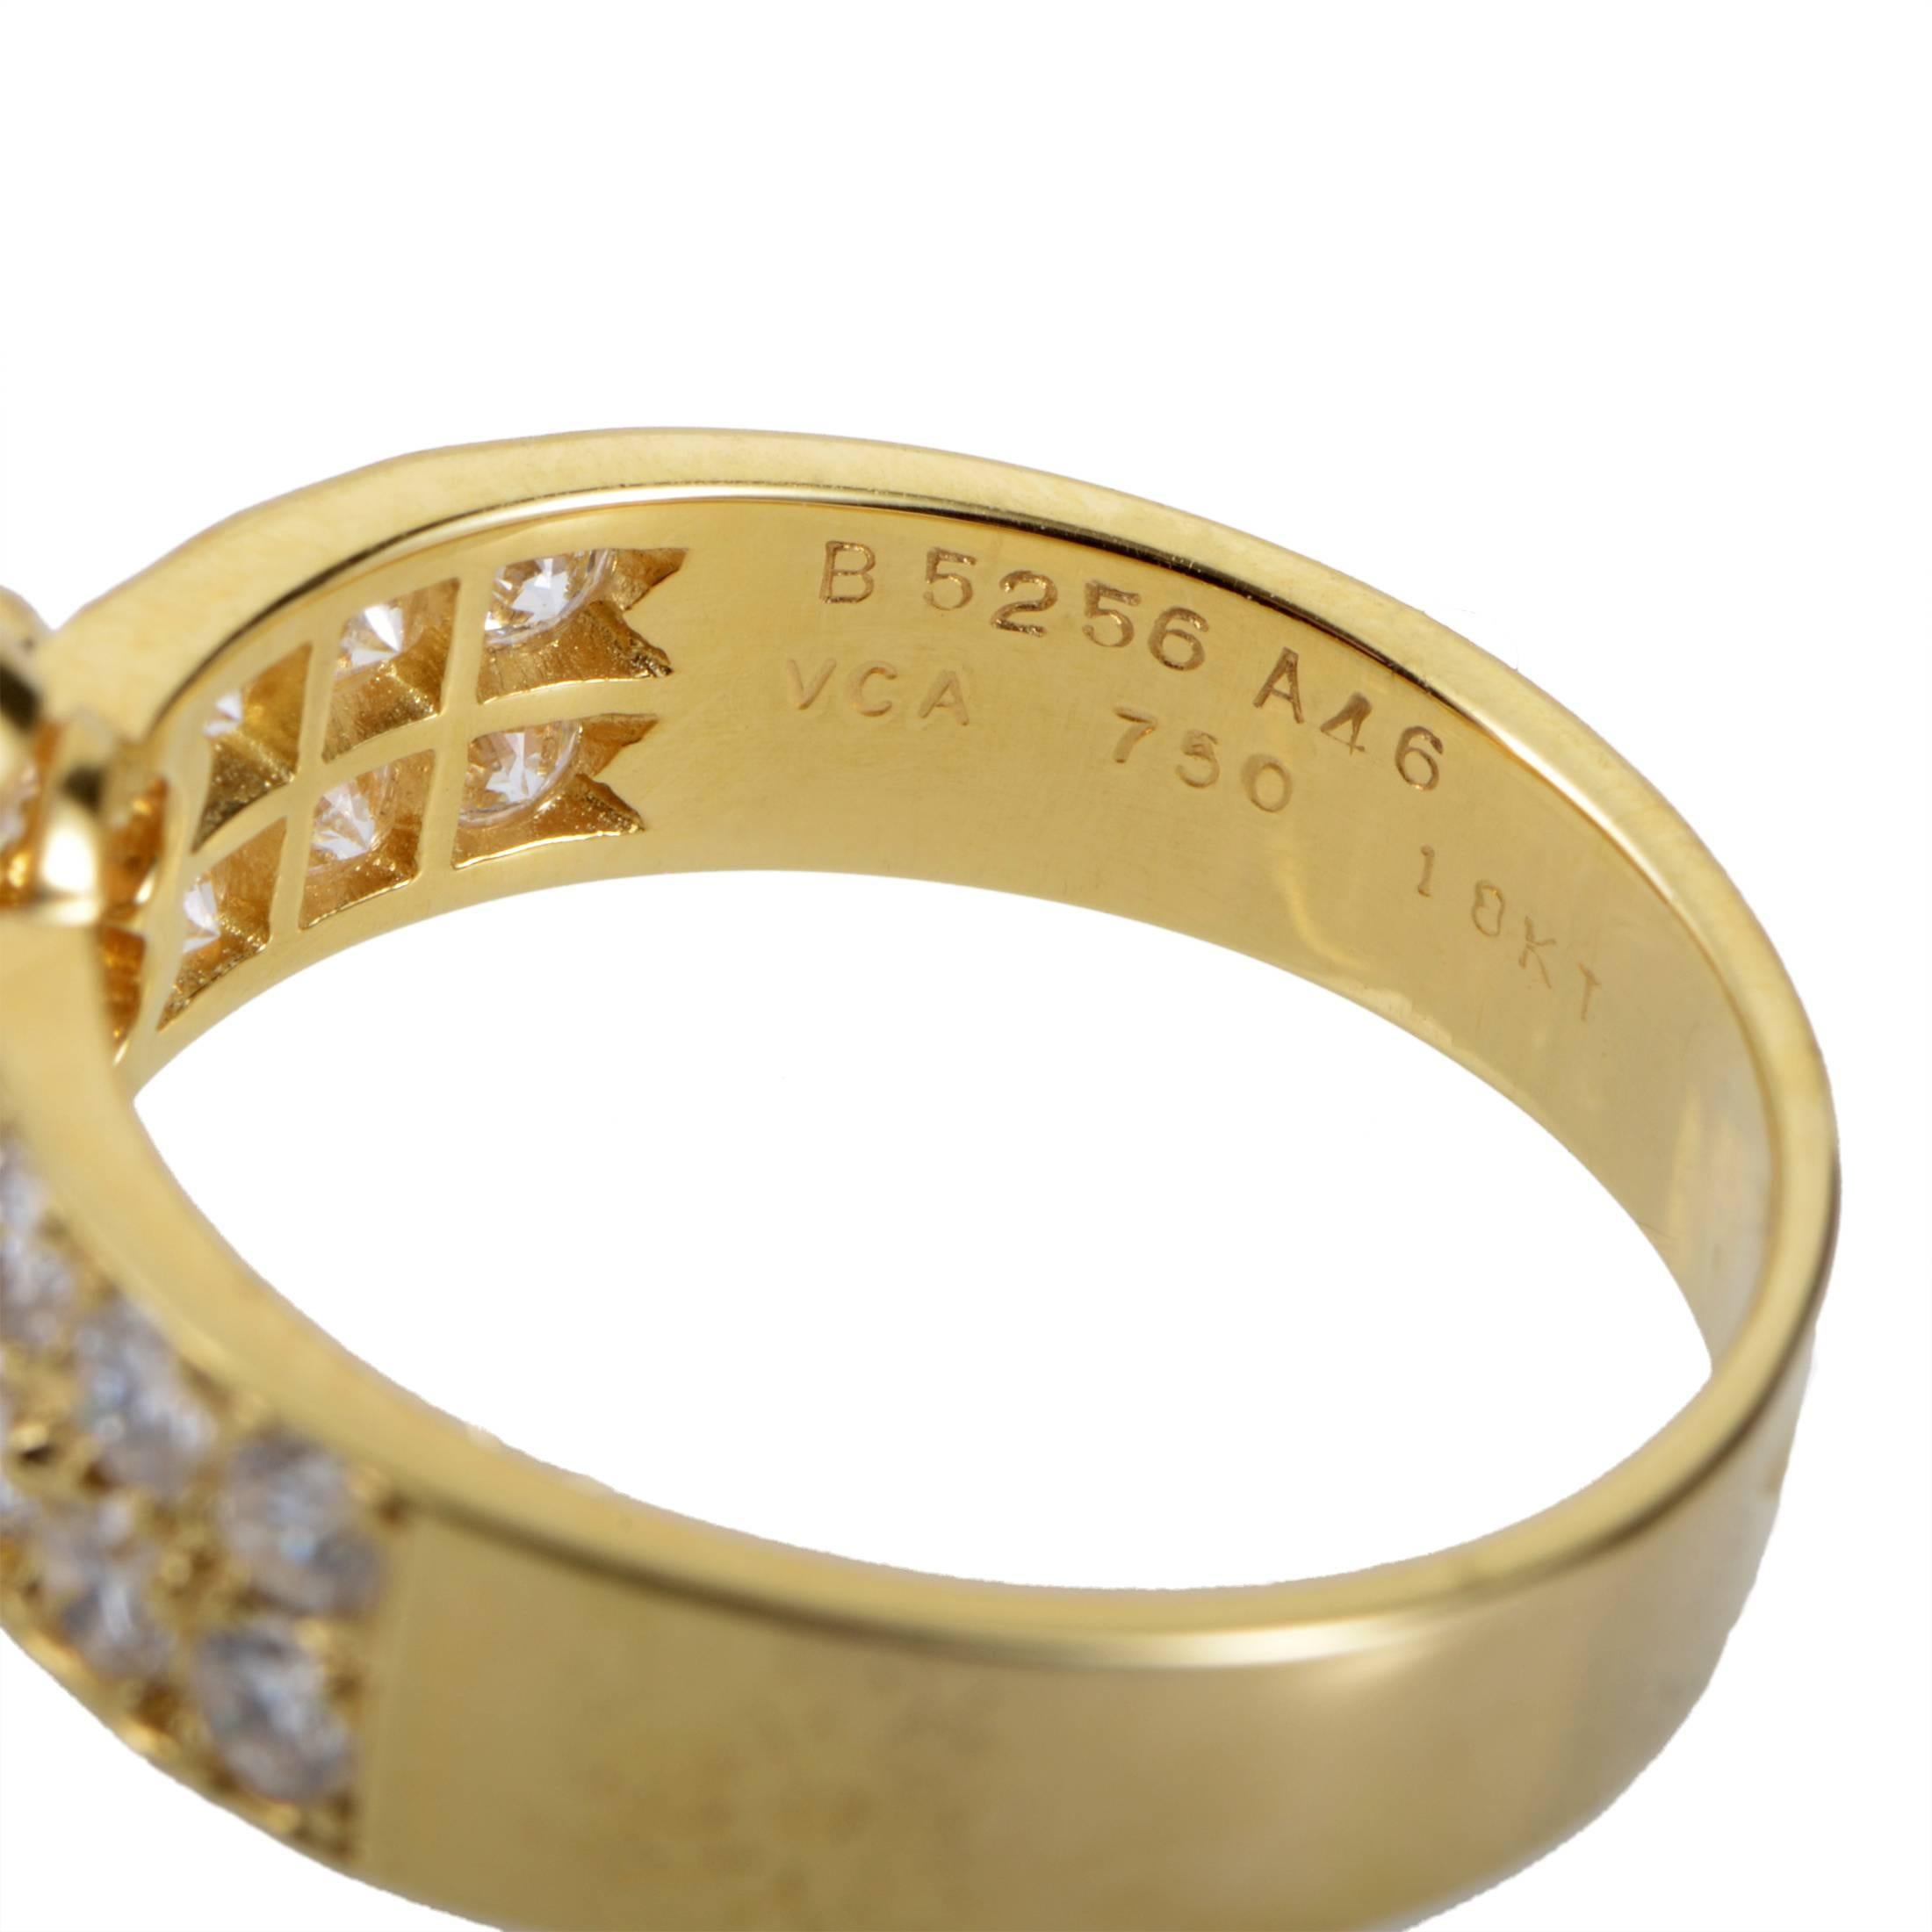 Van Cleef & Arpels Fleurette Yellow Gold and Diamond Ring 1